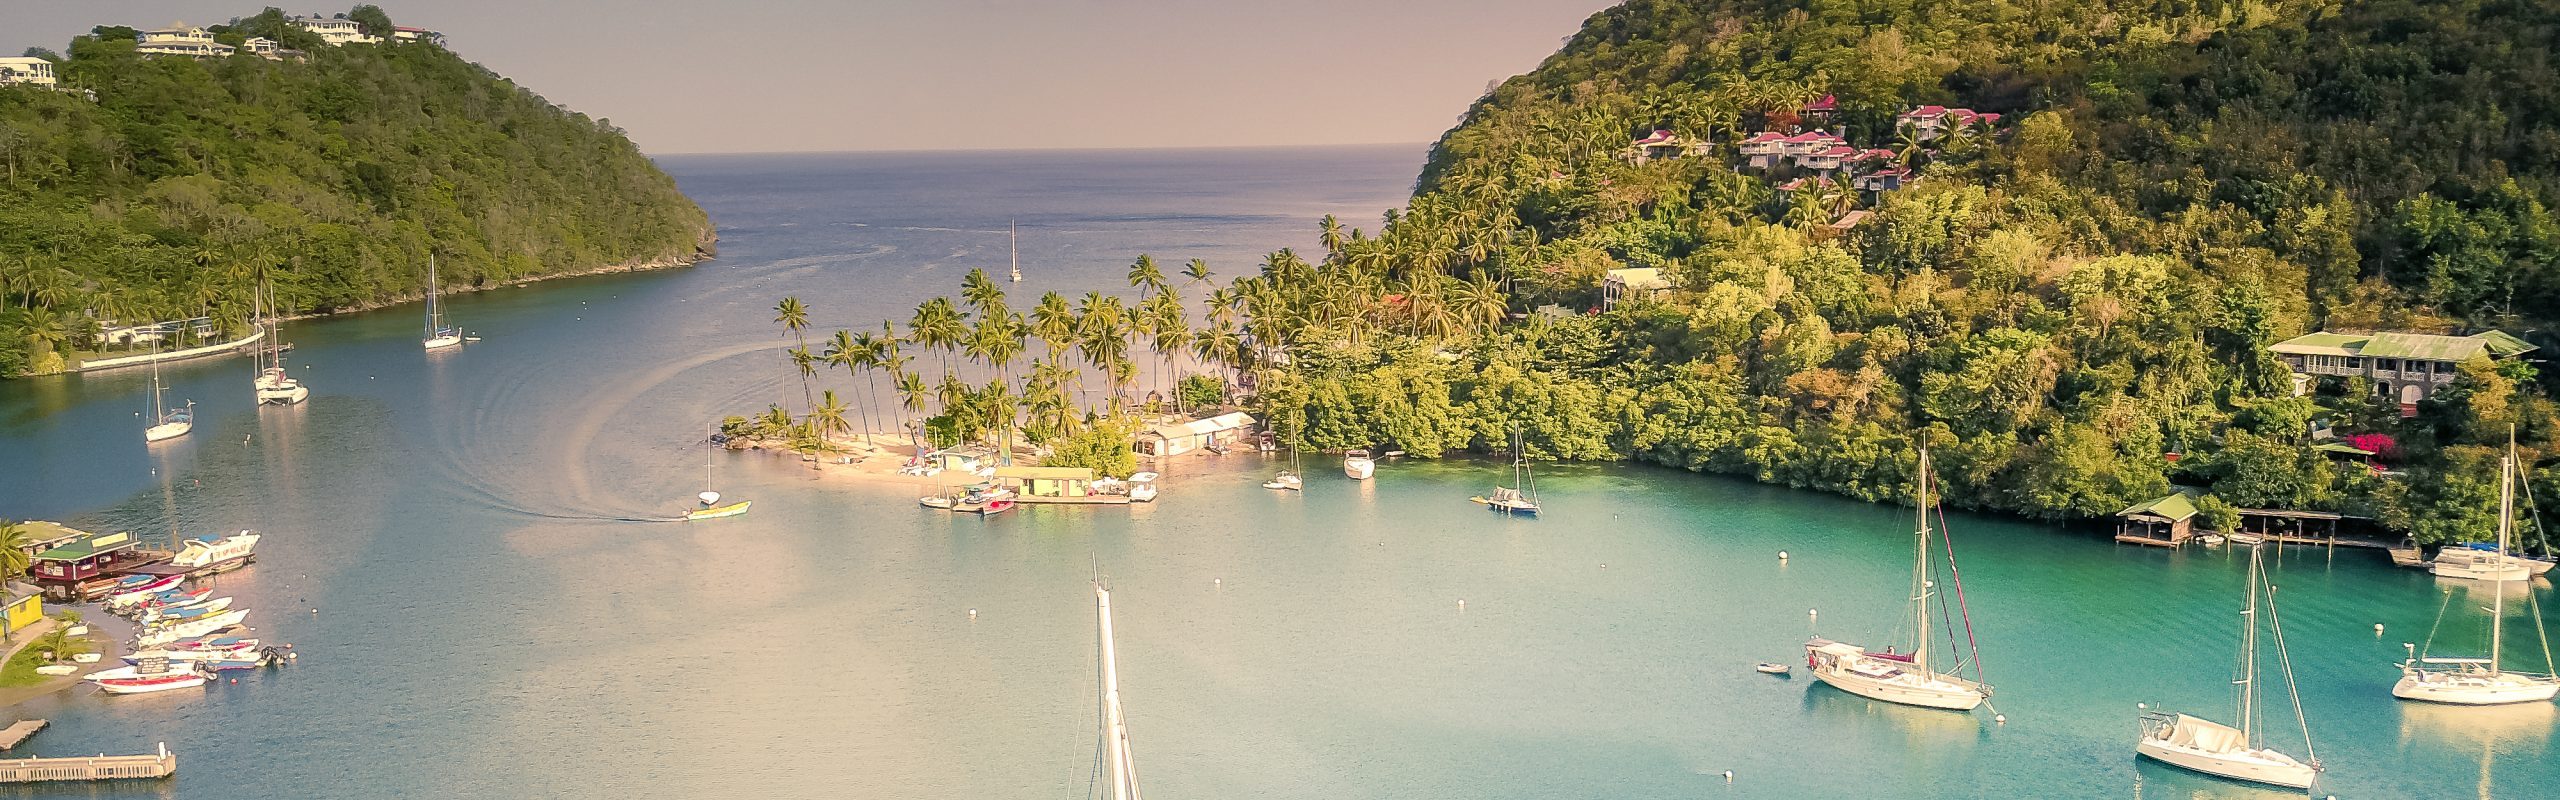 St Lucia Yacht Charter